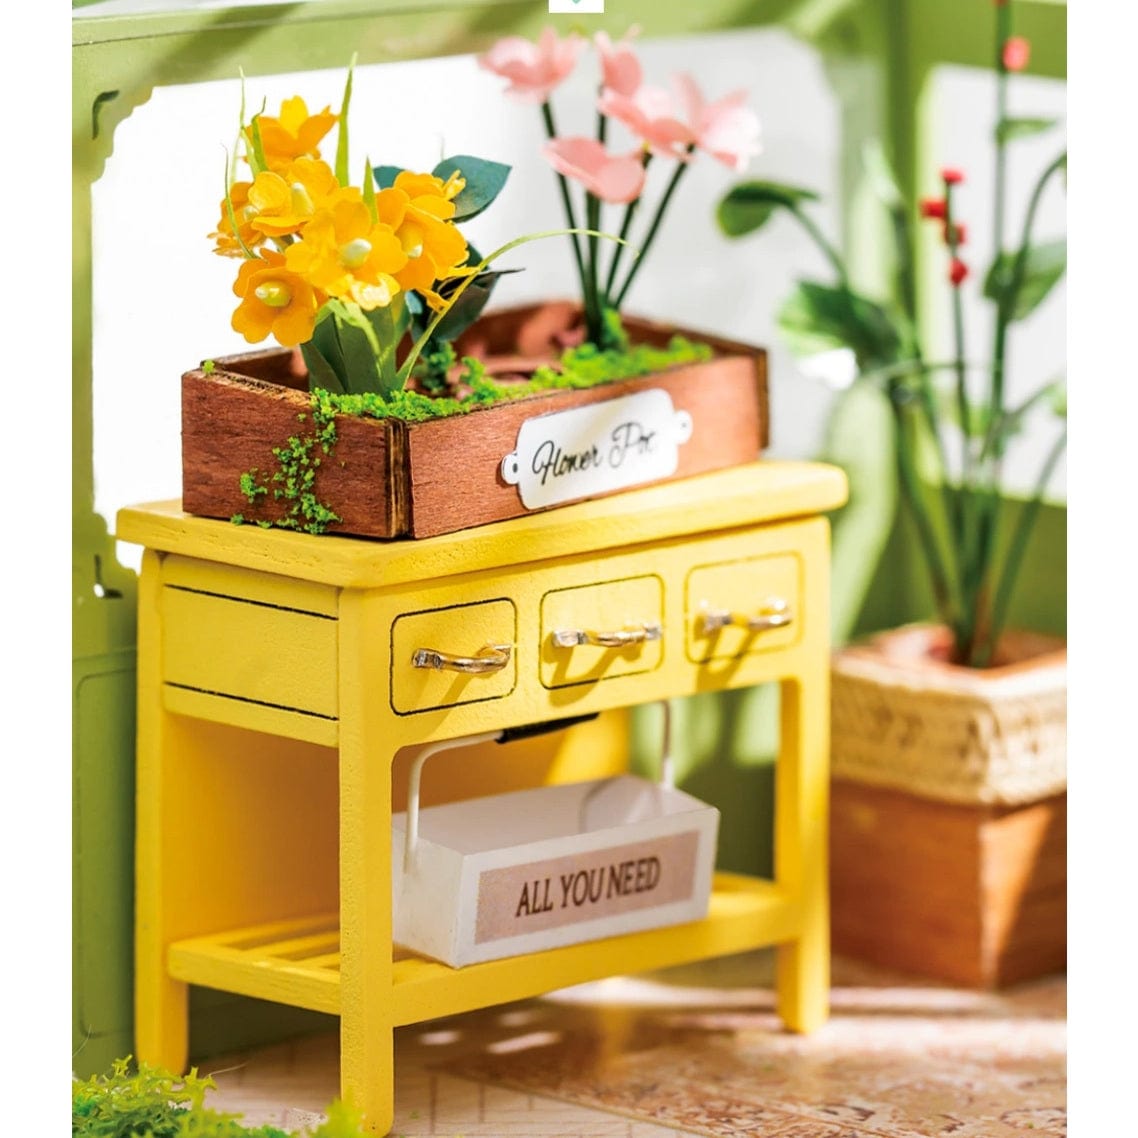 Hands Craft DIY Miniature Dollhouse Kit: Spring Encounter Flowers Kawaii Gifts 850026738445